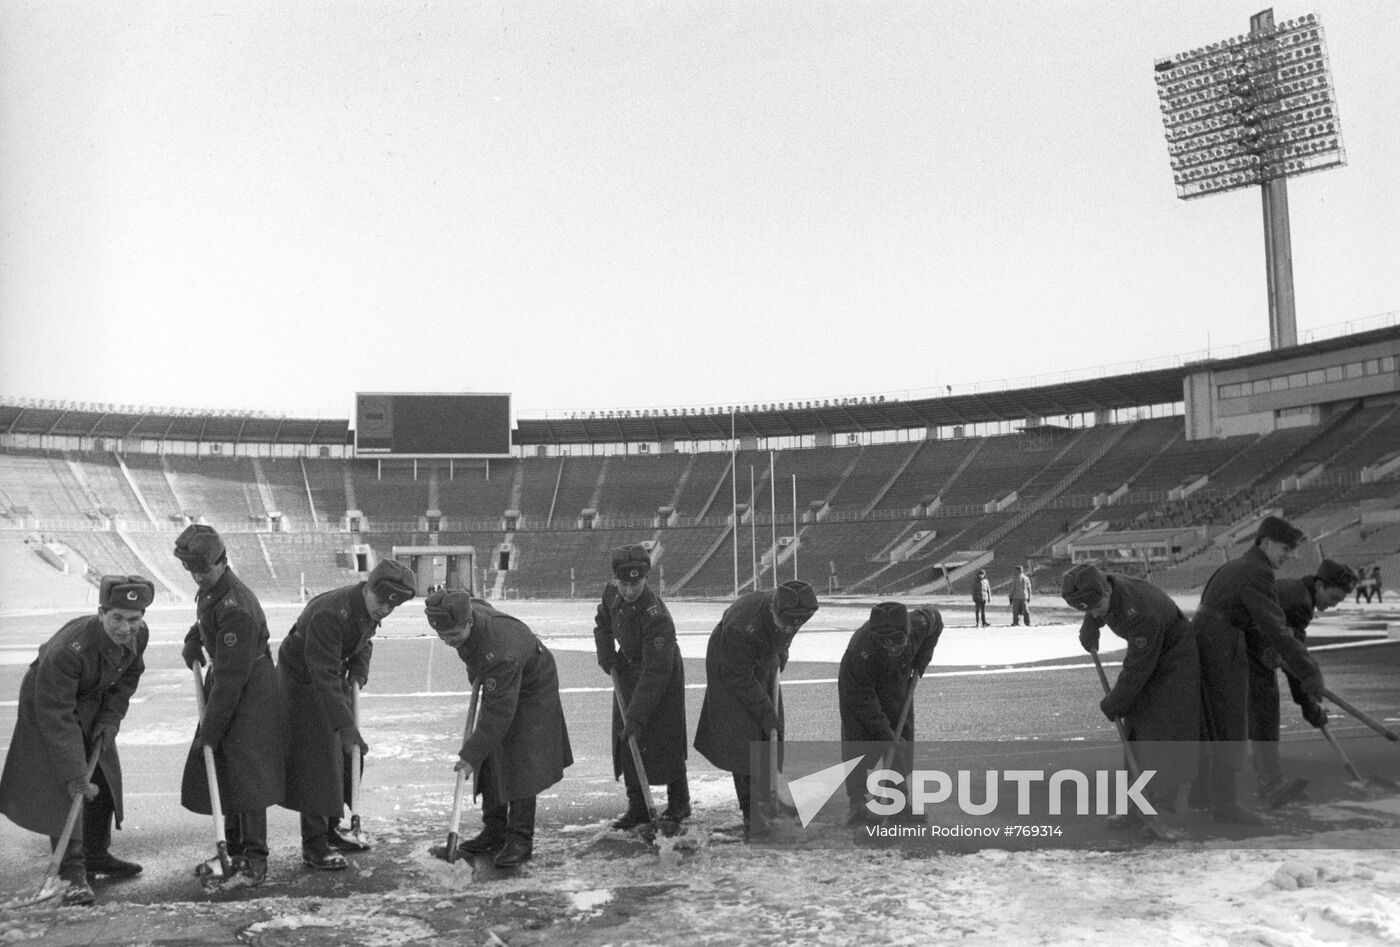 Cleaning stadium of snow